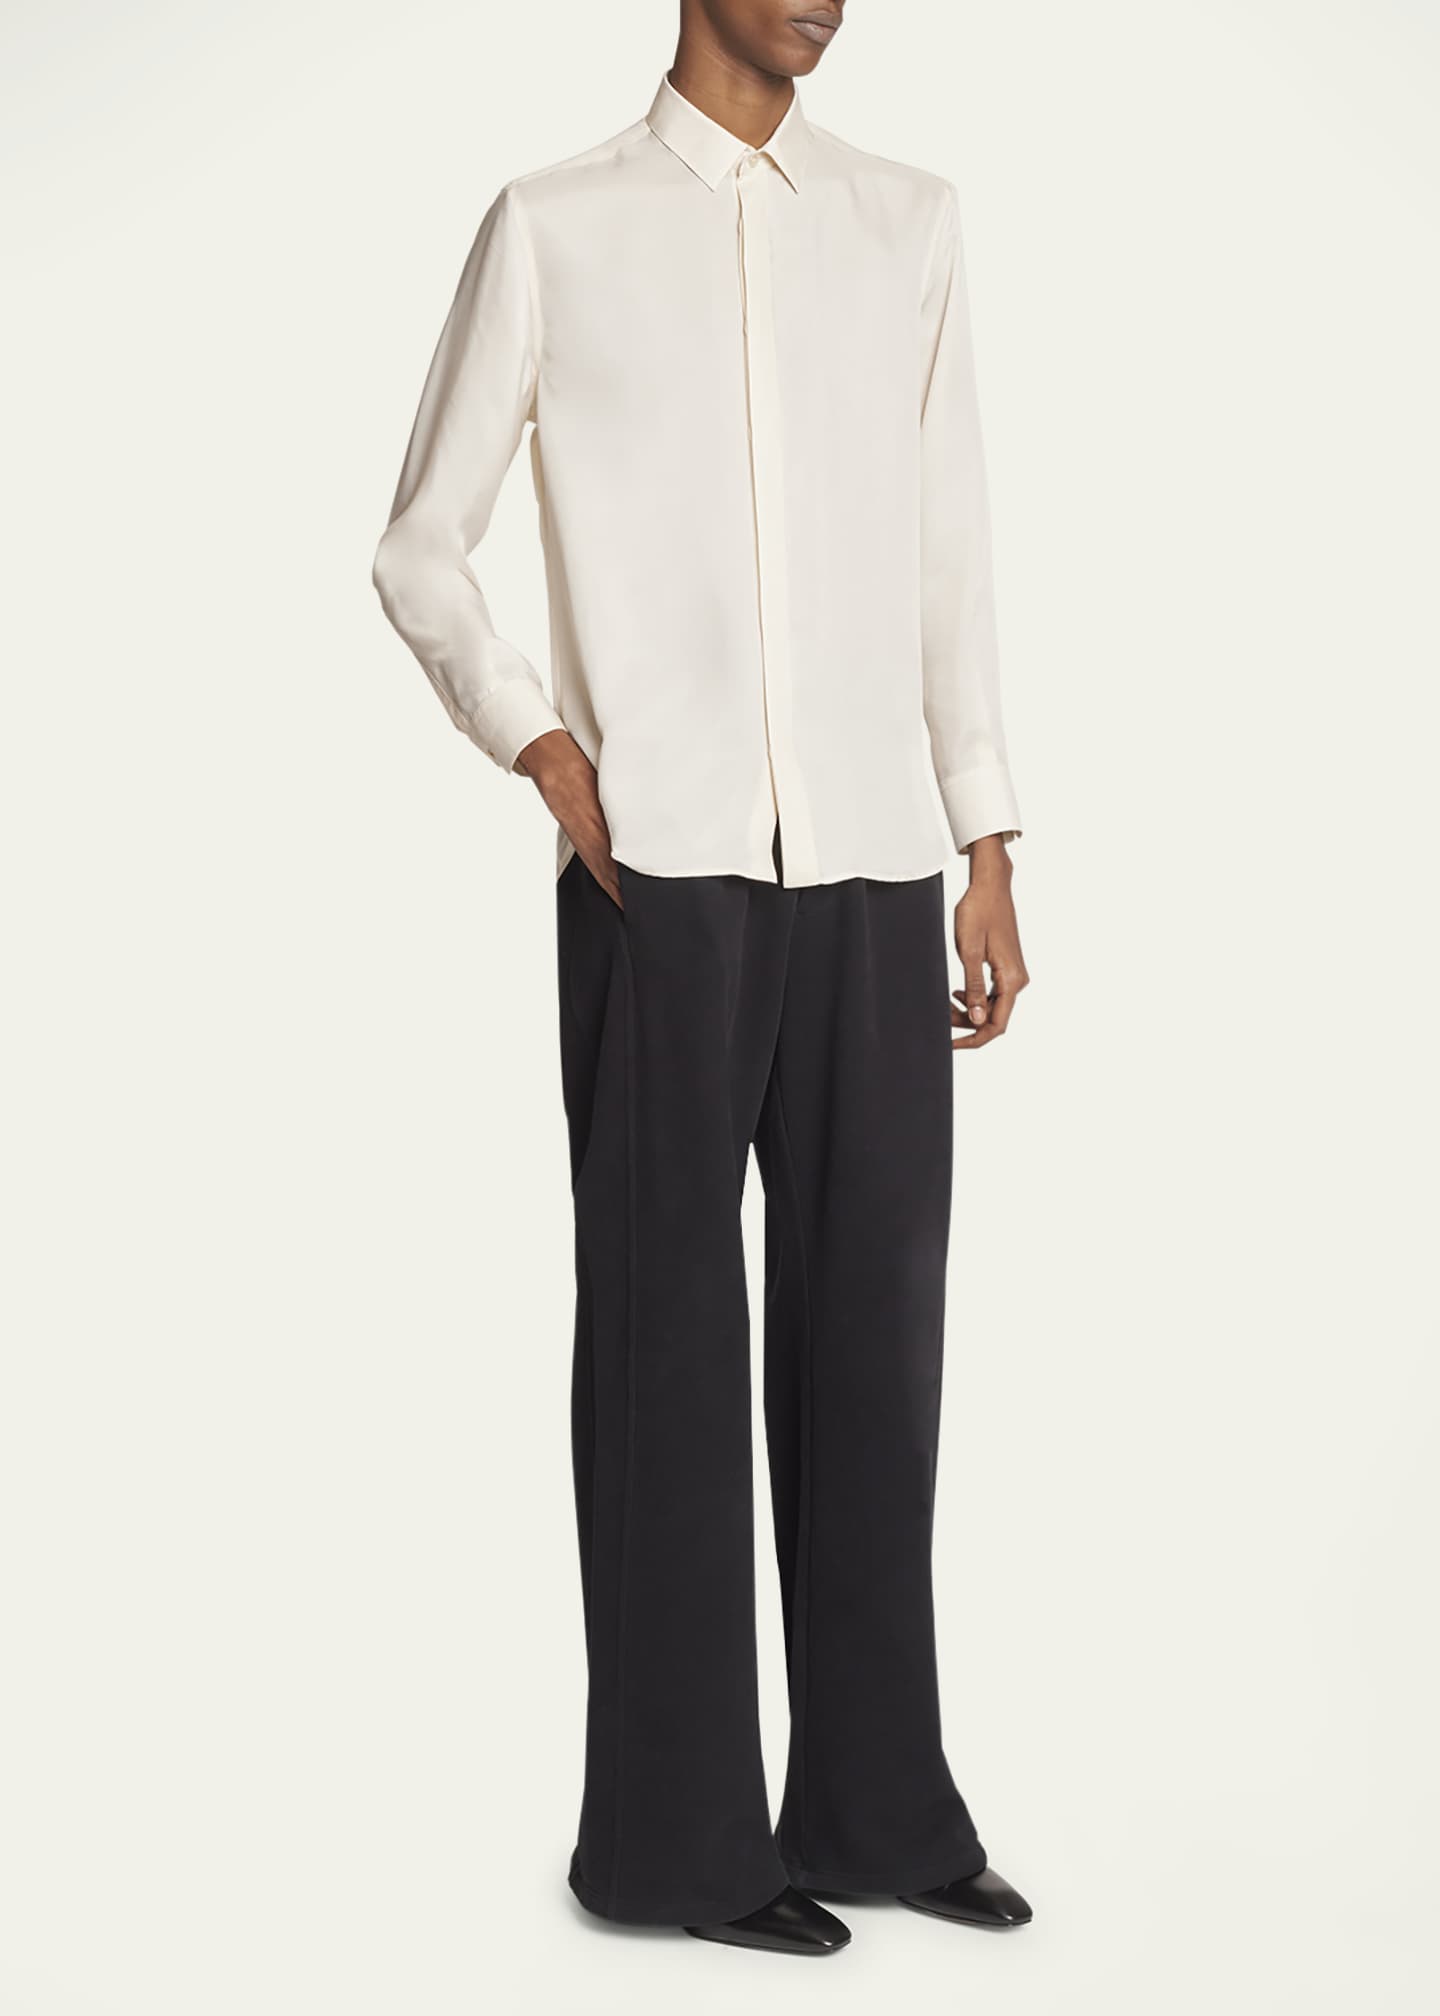 Saint Laurent Men's Yves Satin Dress Shirt - Bergdorf Goodman